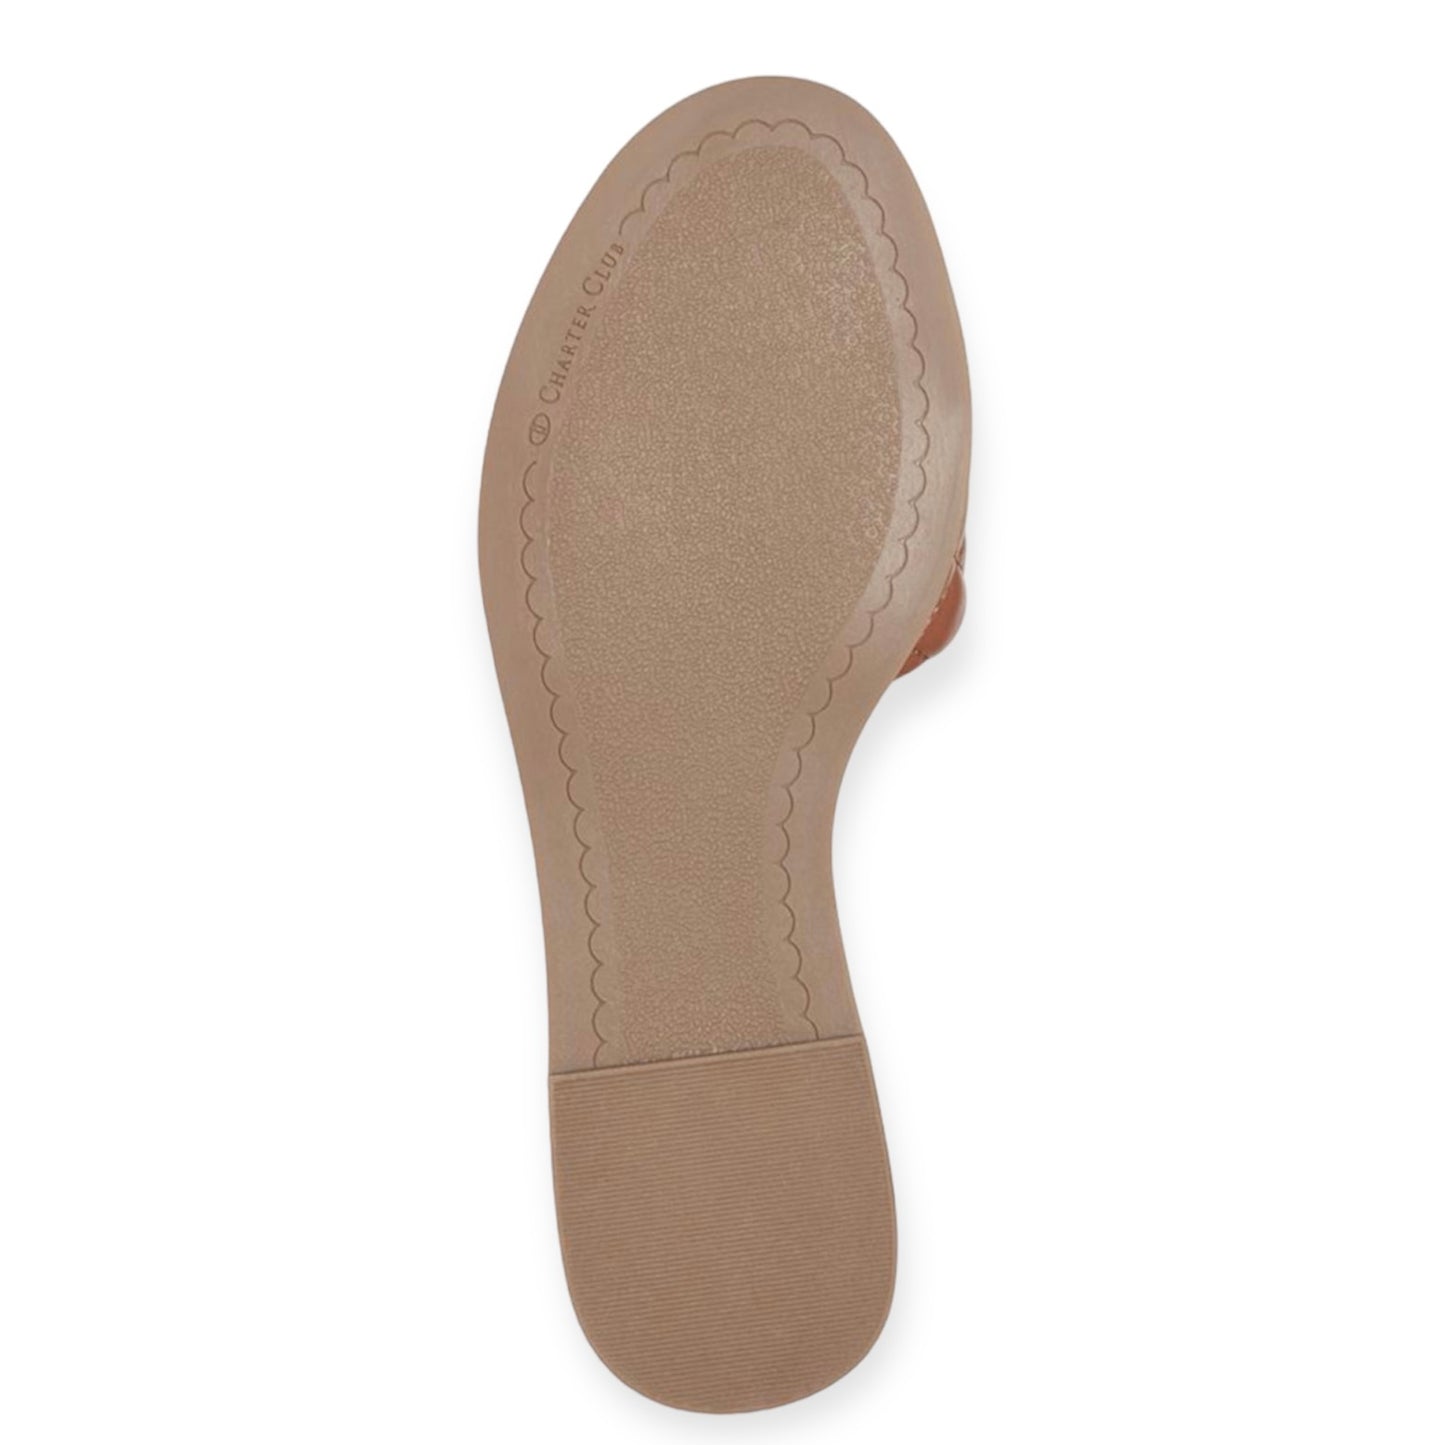 SAFFIEE Cognac Flats Slip On Quilted Round Toe Women's Sandals